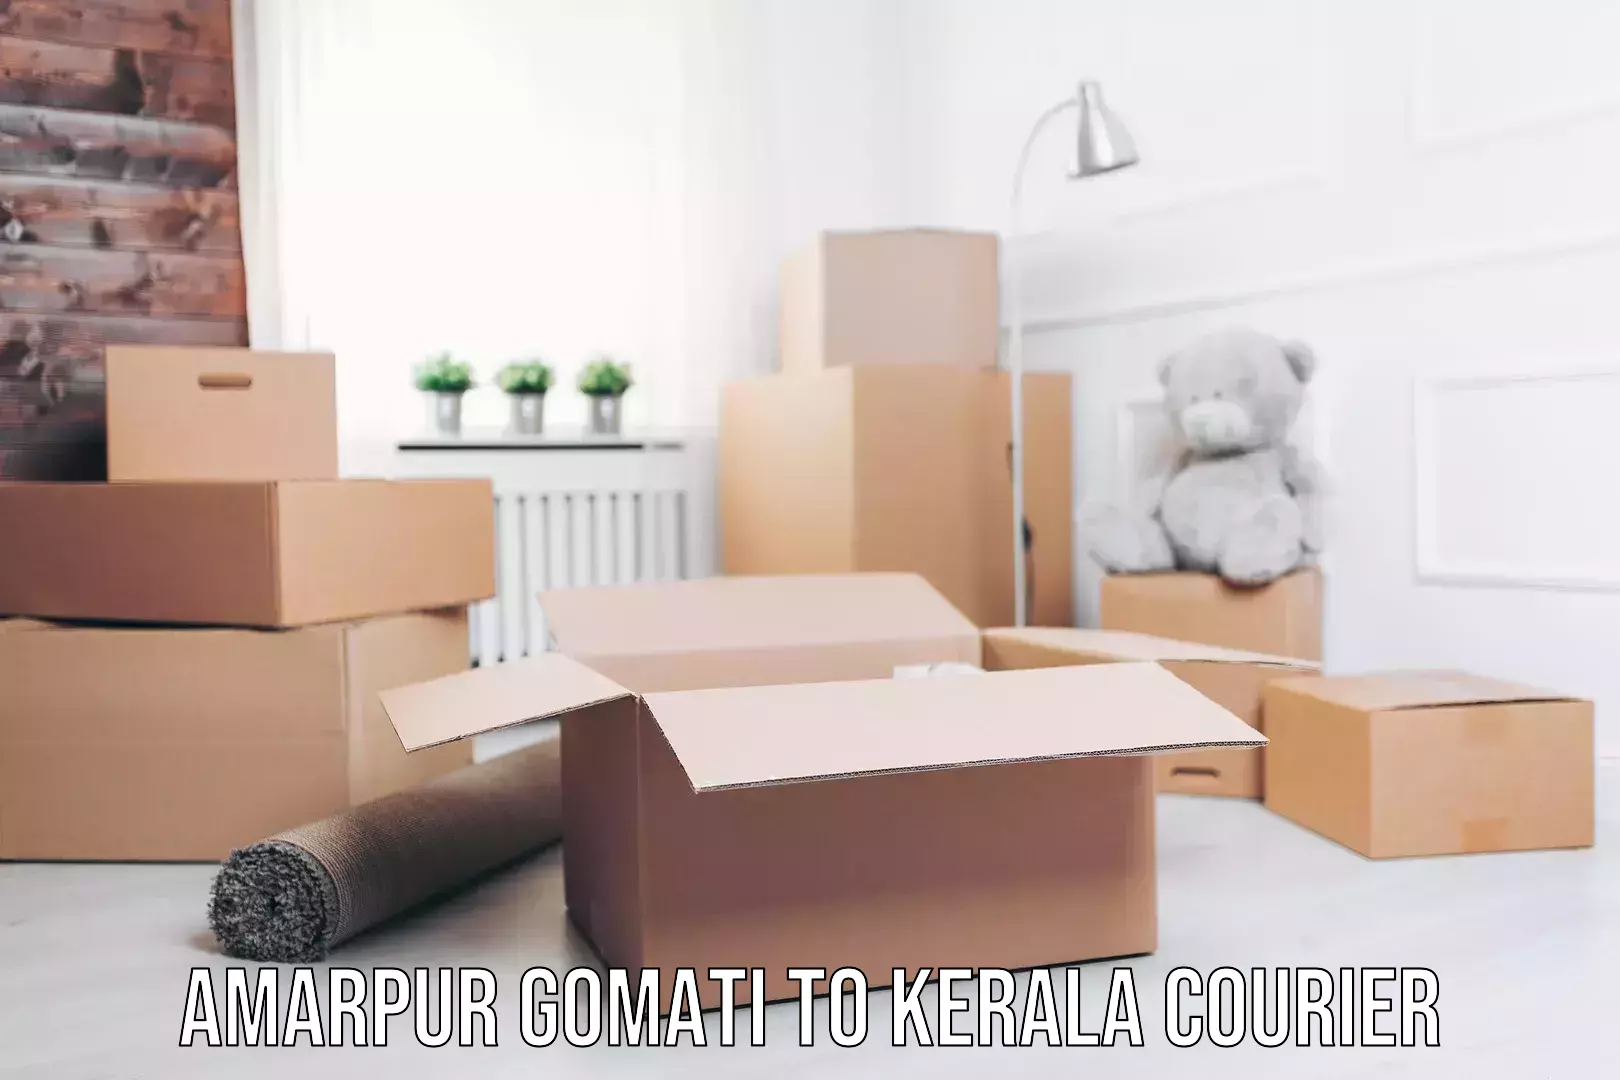 Regular parcel service Amarpur Gomati to Kerala